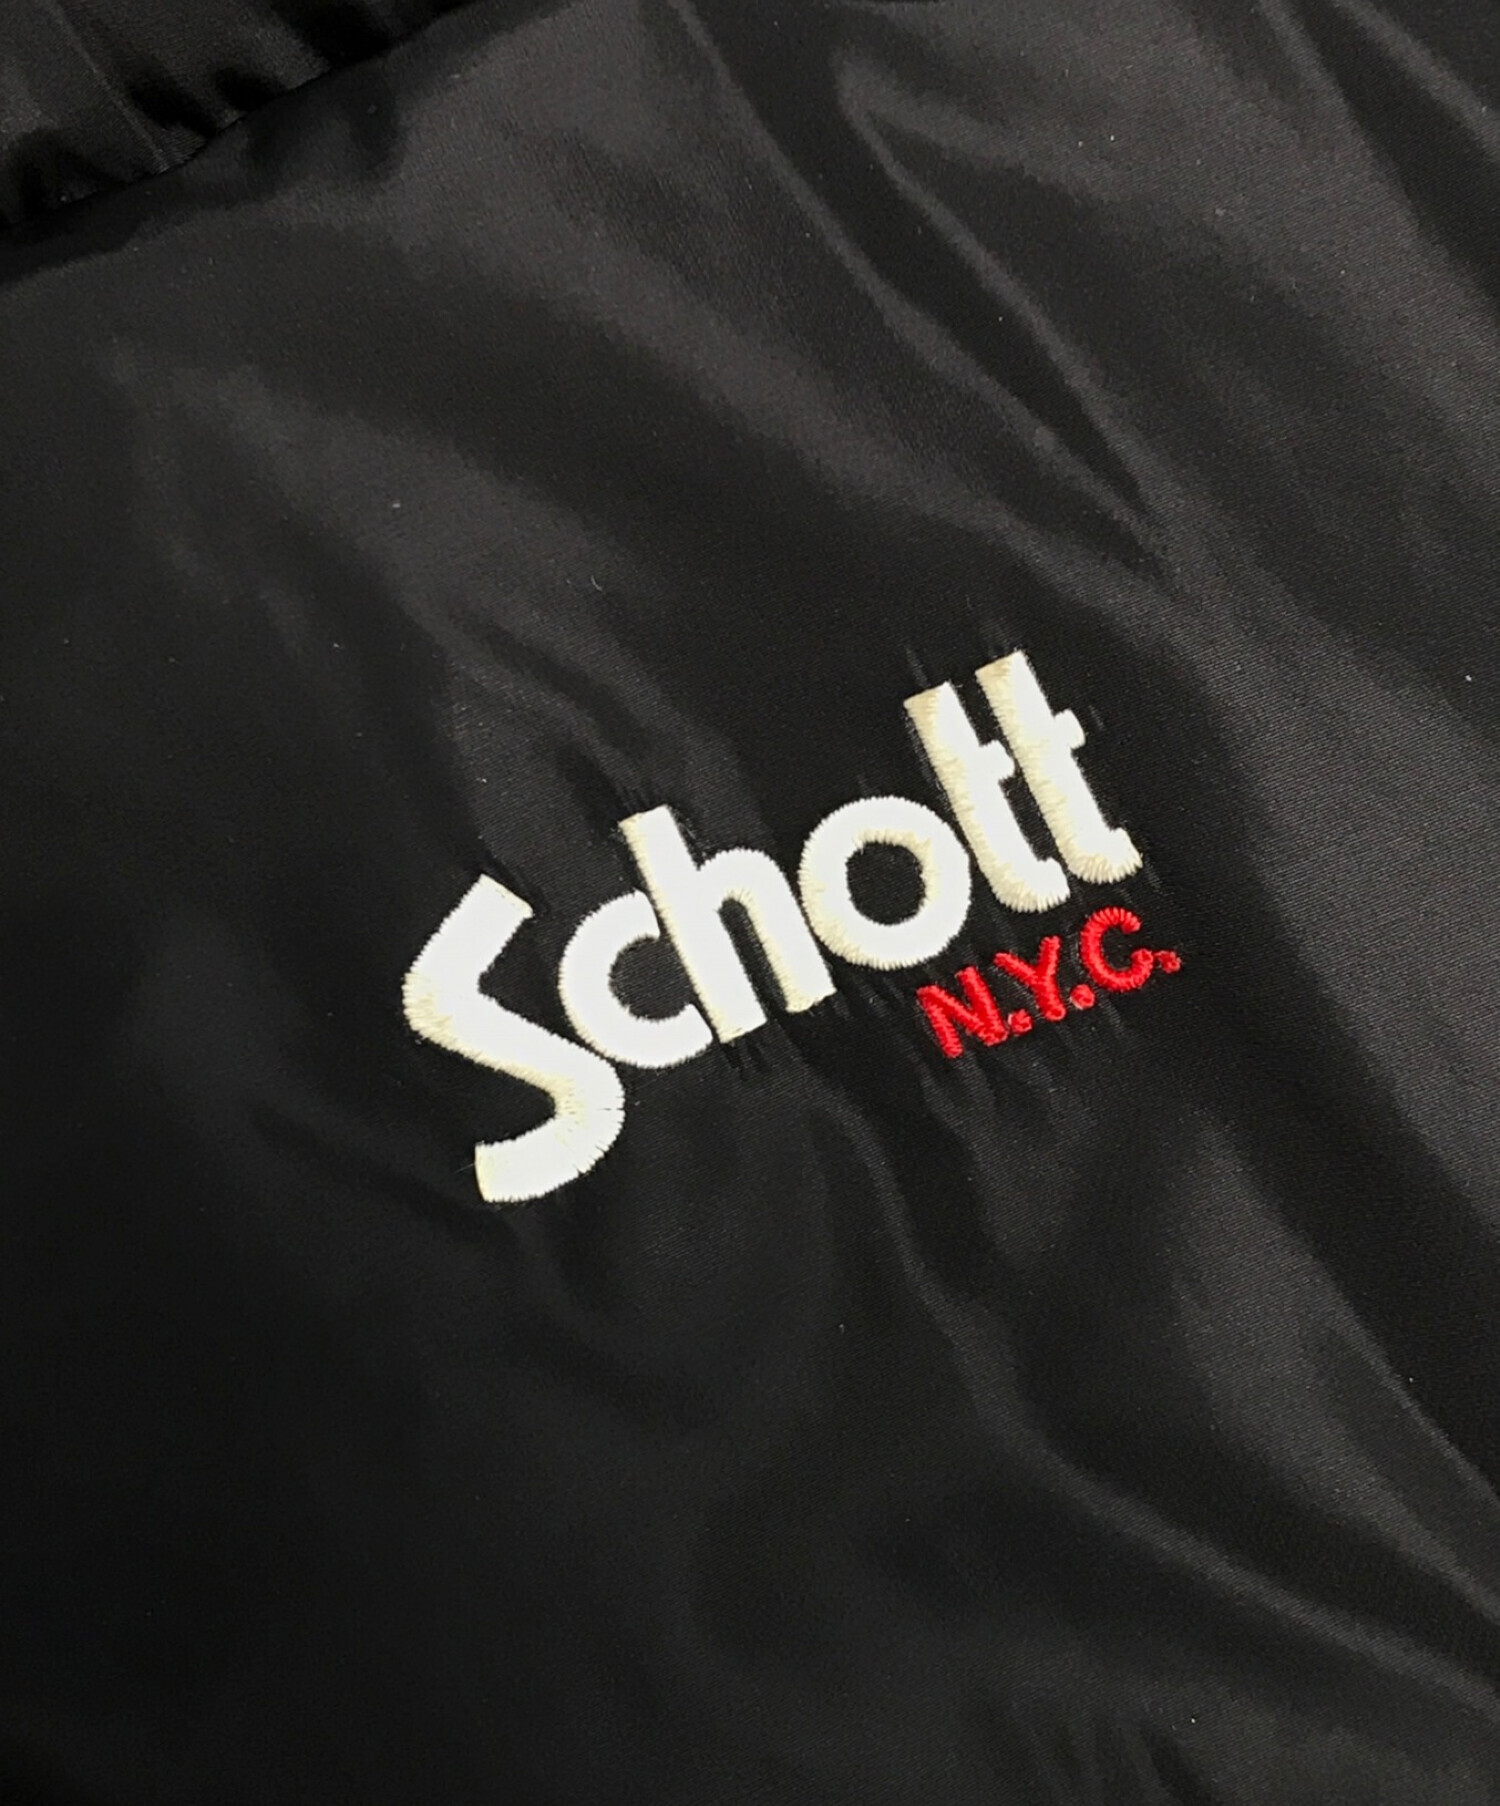 ★SALE |Schott ショット 公式通販|<br>SCH-SCHOTT LOGO TUMBLER ショット ロゴ タンブラー ※セール品につき交換返品不可